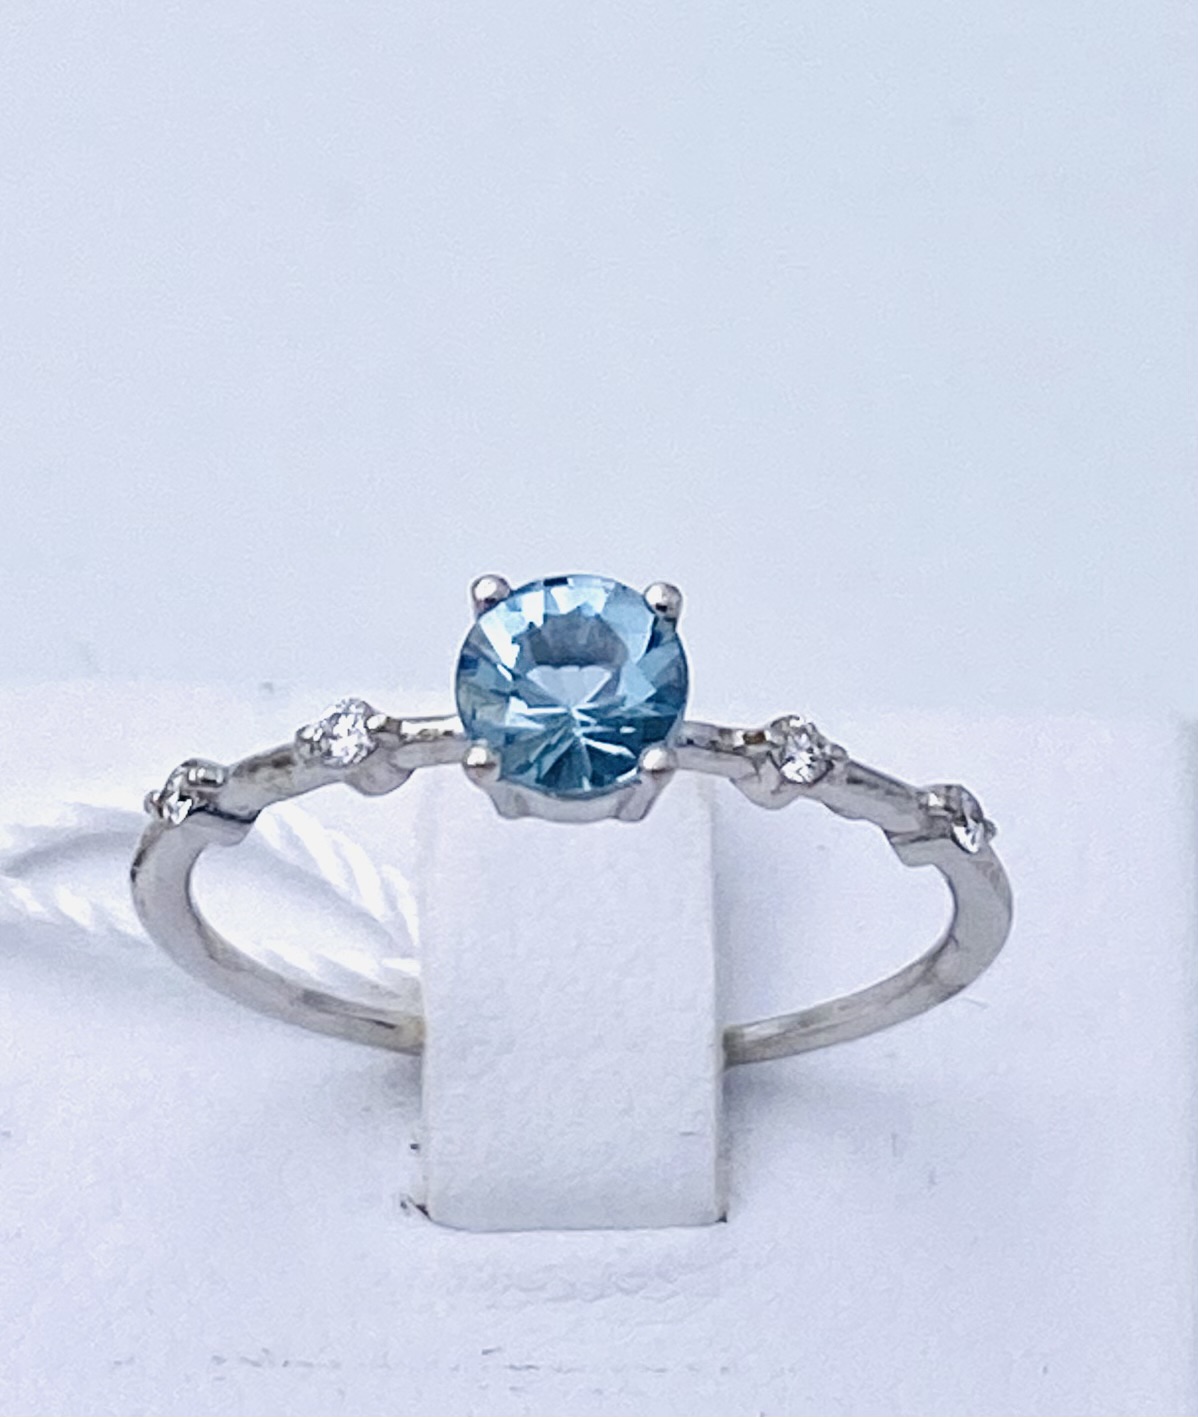 Aquamarine ring diamonds white gold 750% Art.AN2445-1